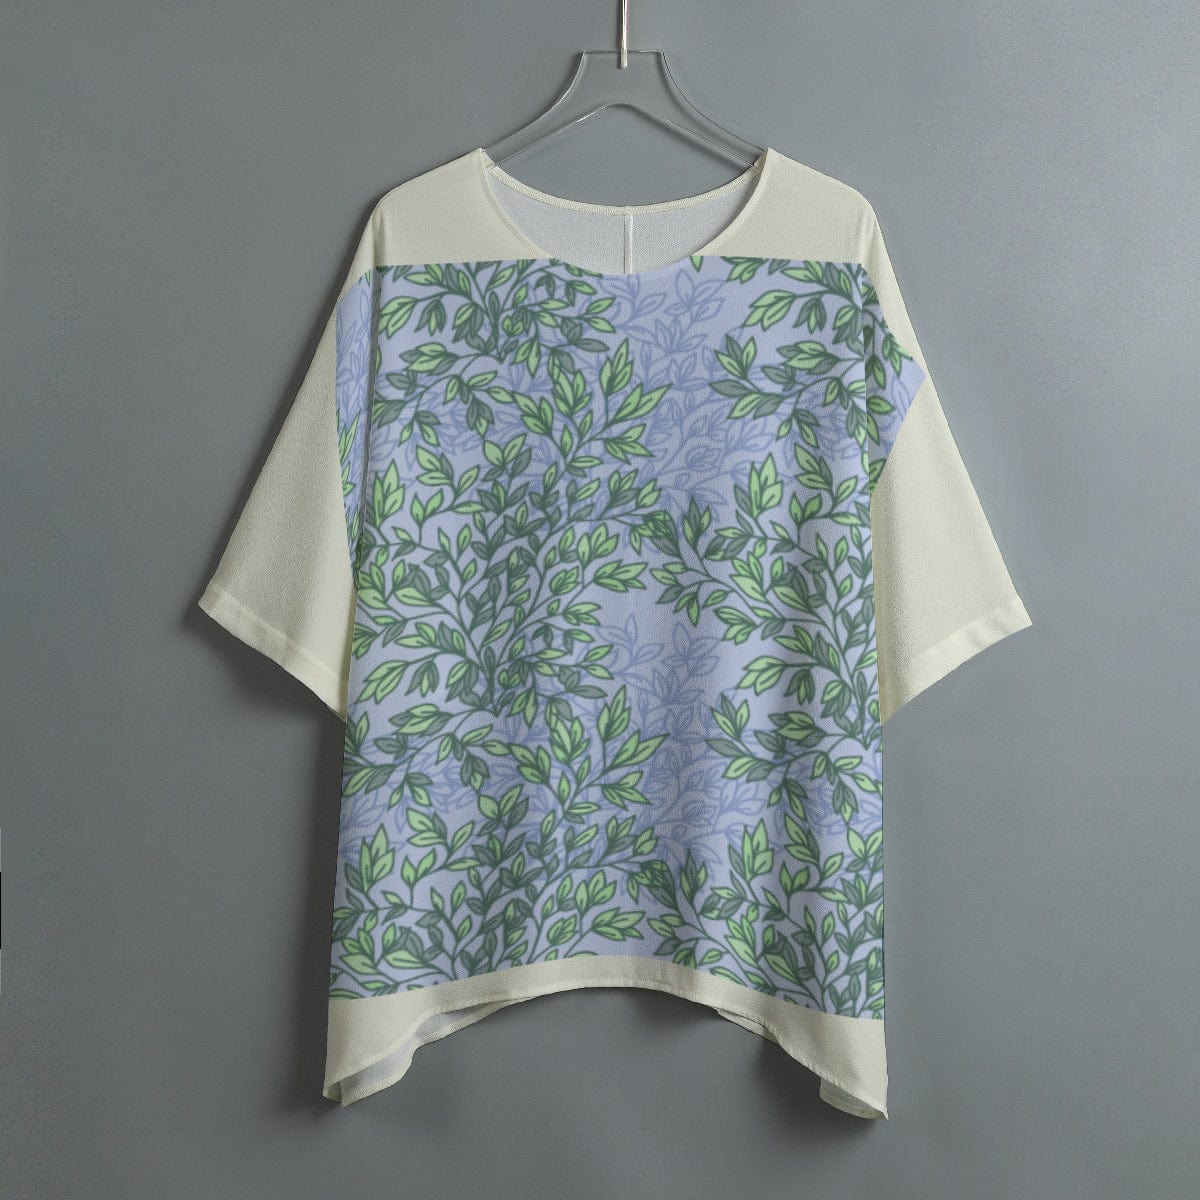 Yoycol 2XL / White All-Over Print Women's Bat Sleeve Shirt